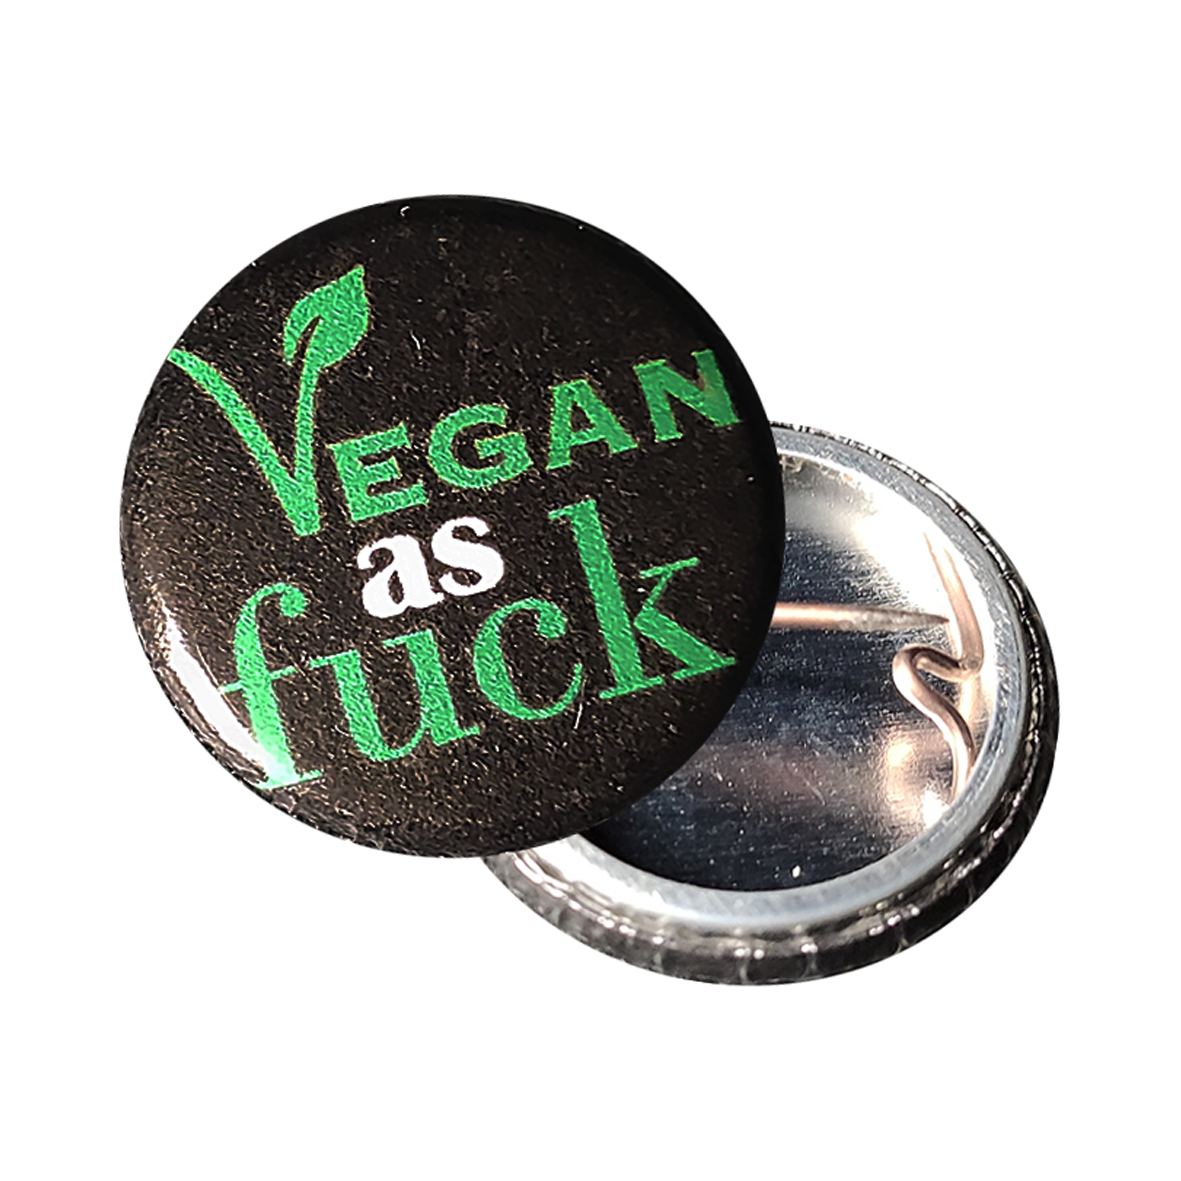 Vegan as fuck